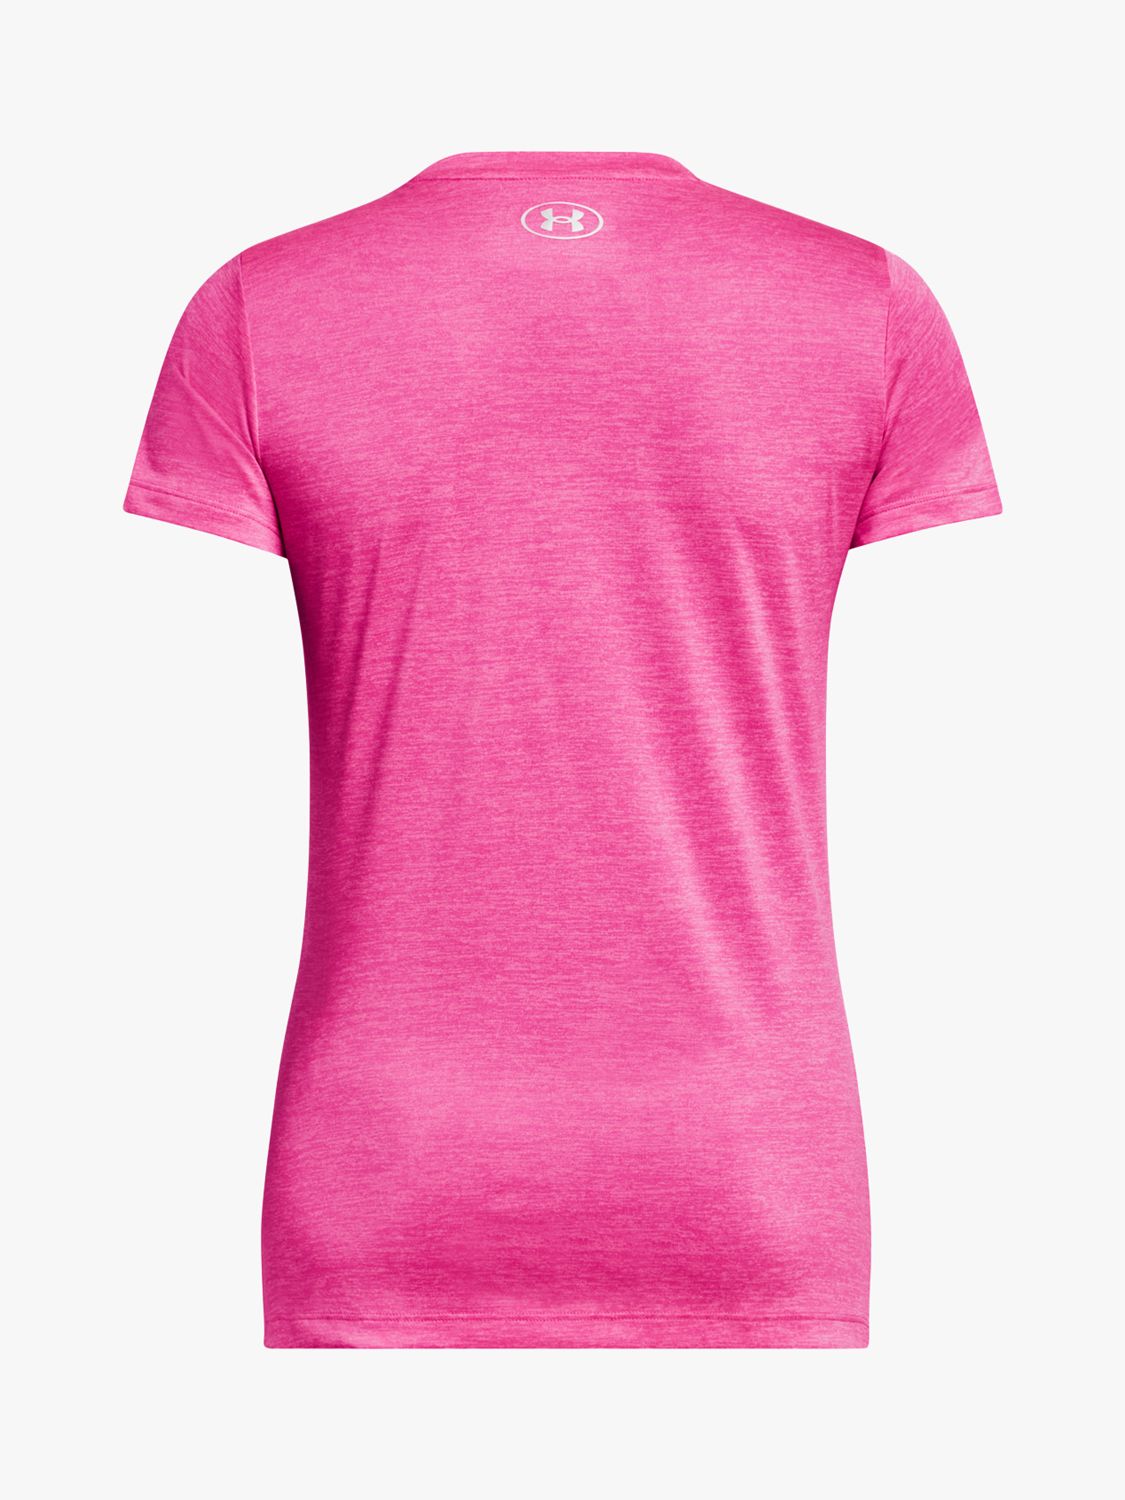 Under Armour Iso-Chill Women's Running T-Shirt Bittersweet Pink